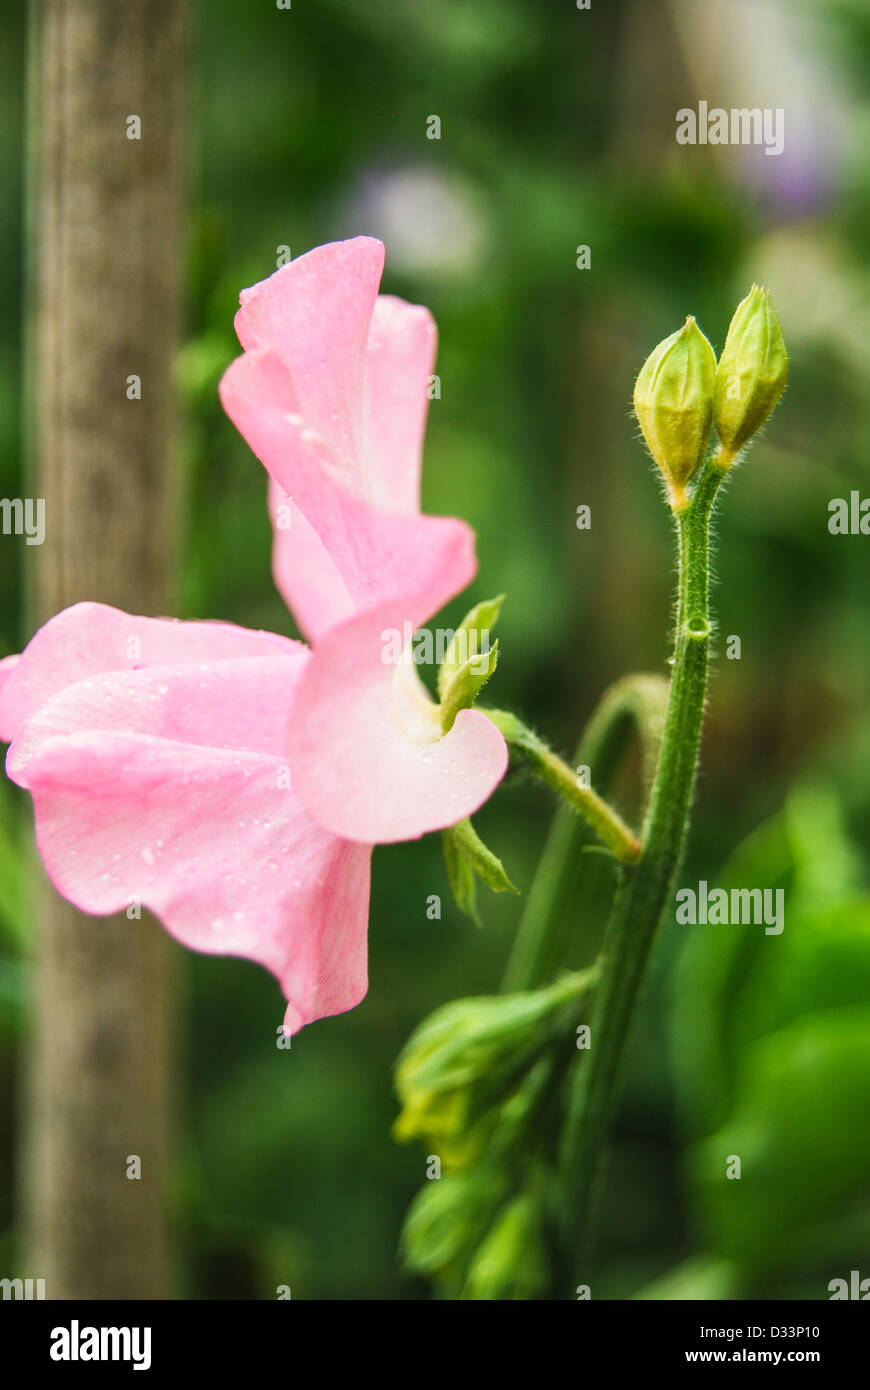 Sweet pea flower showing bud drop Stock Photo